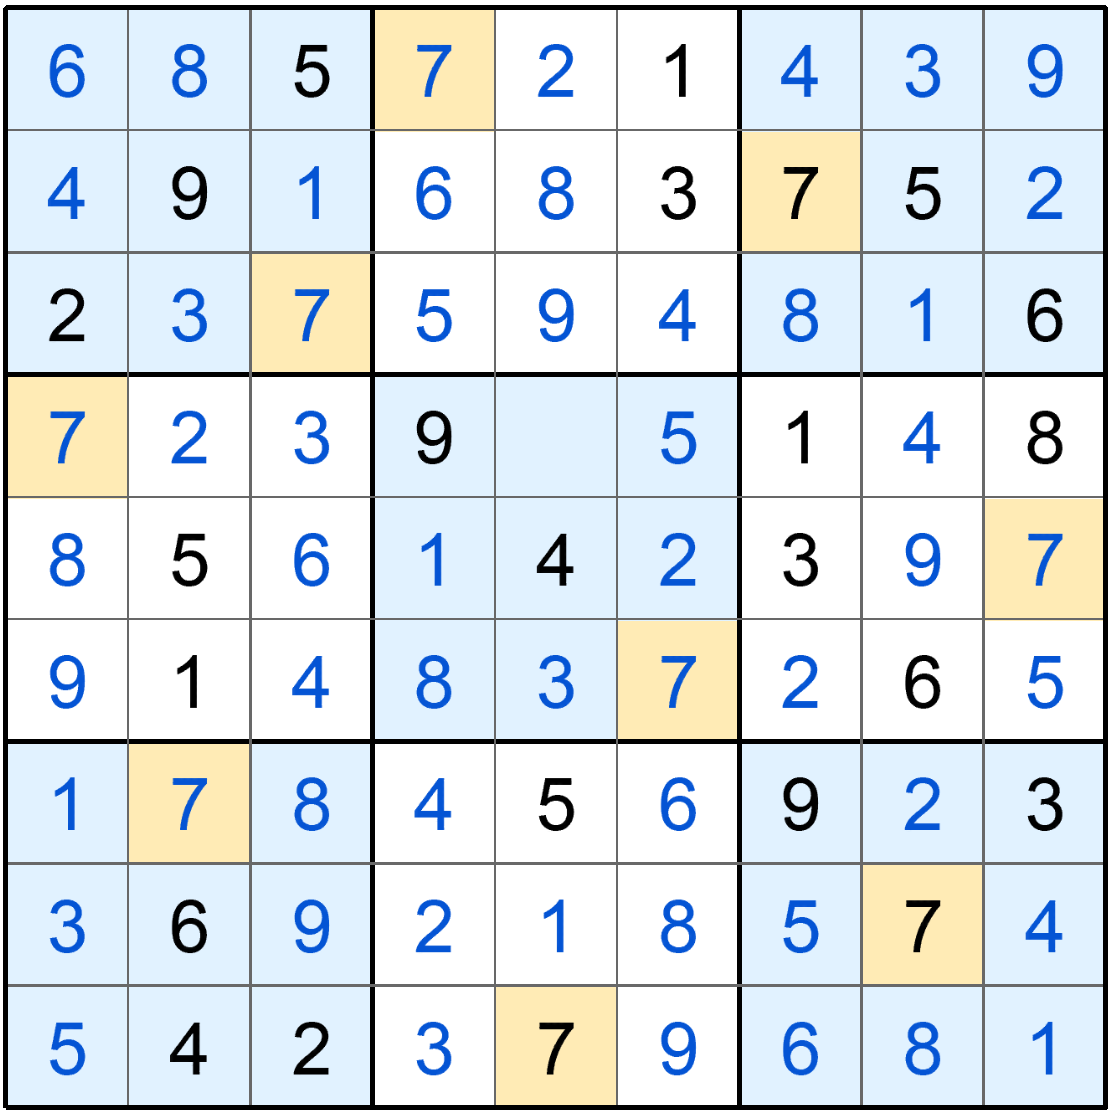 Puzzle Page Sudoku June 25 2019 Answers - PuzzlePageAnswers.net